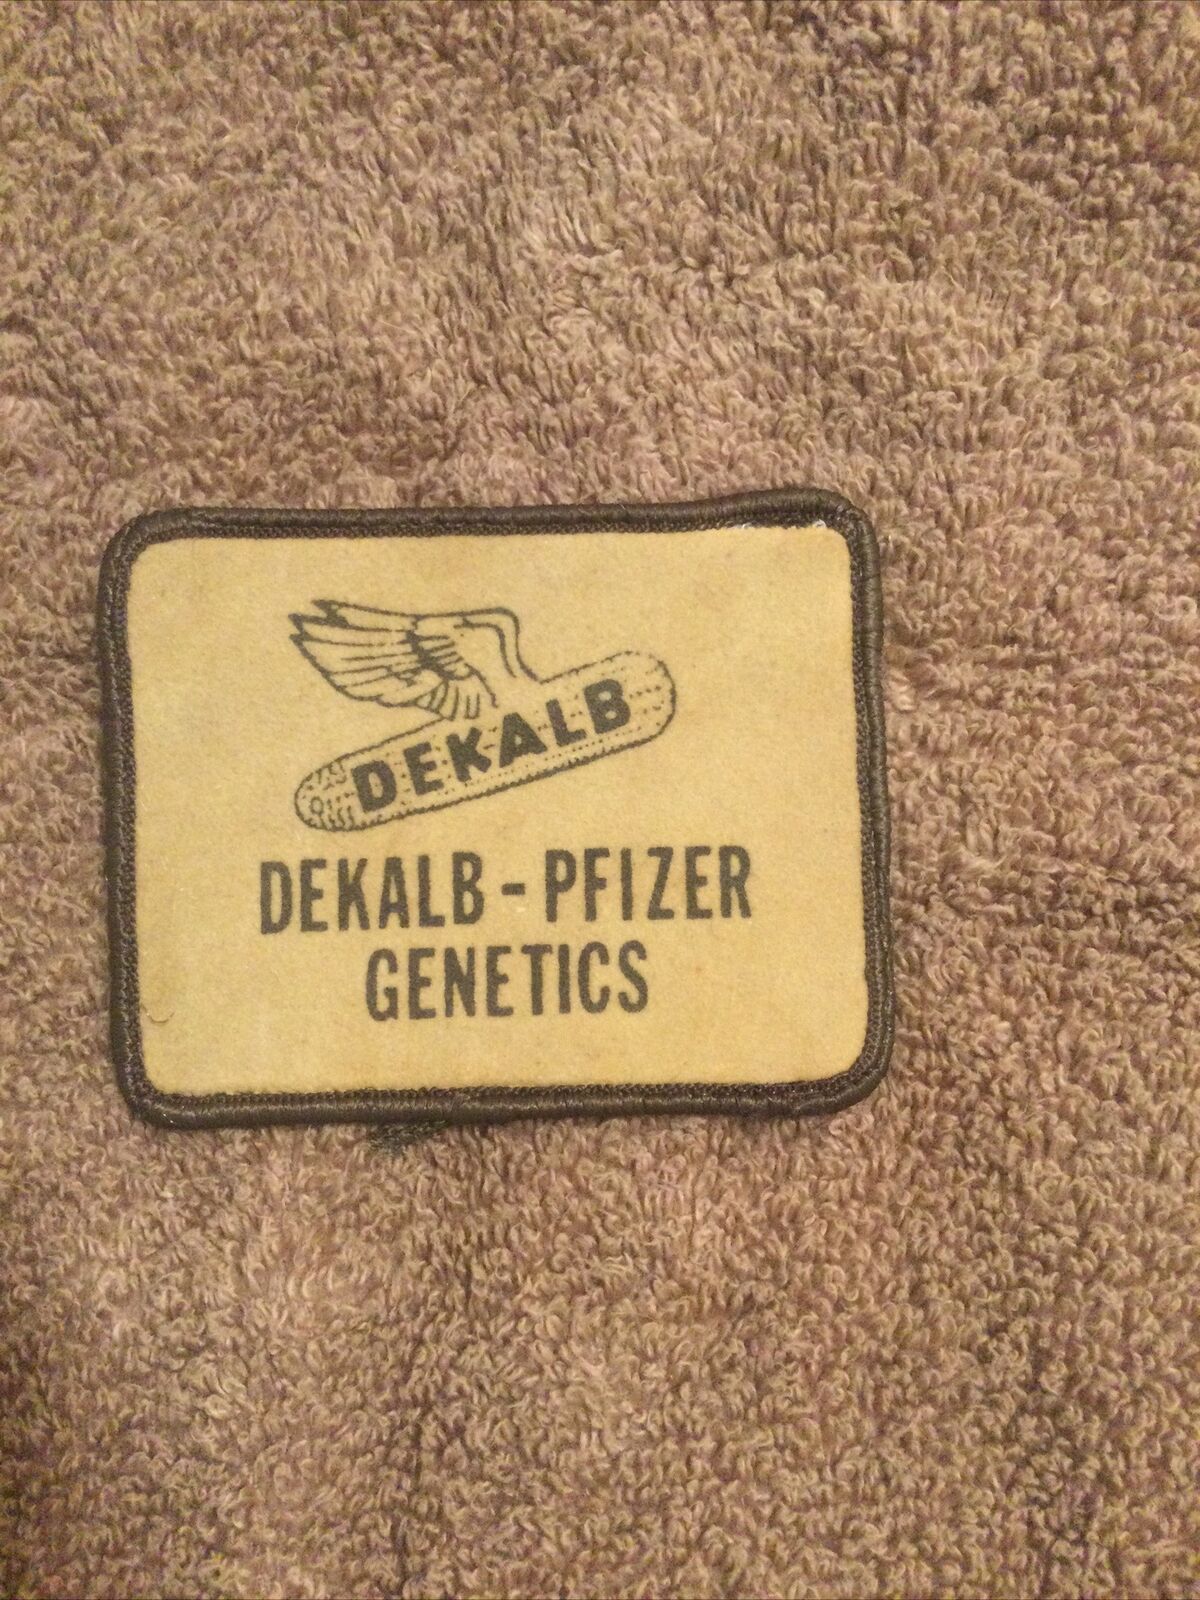 DeKalb -Pfizer Genetics patch